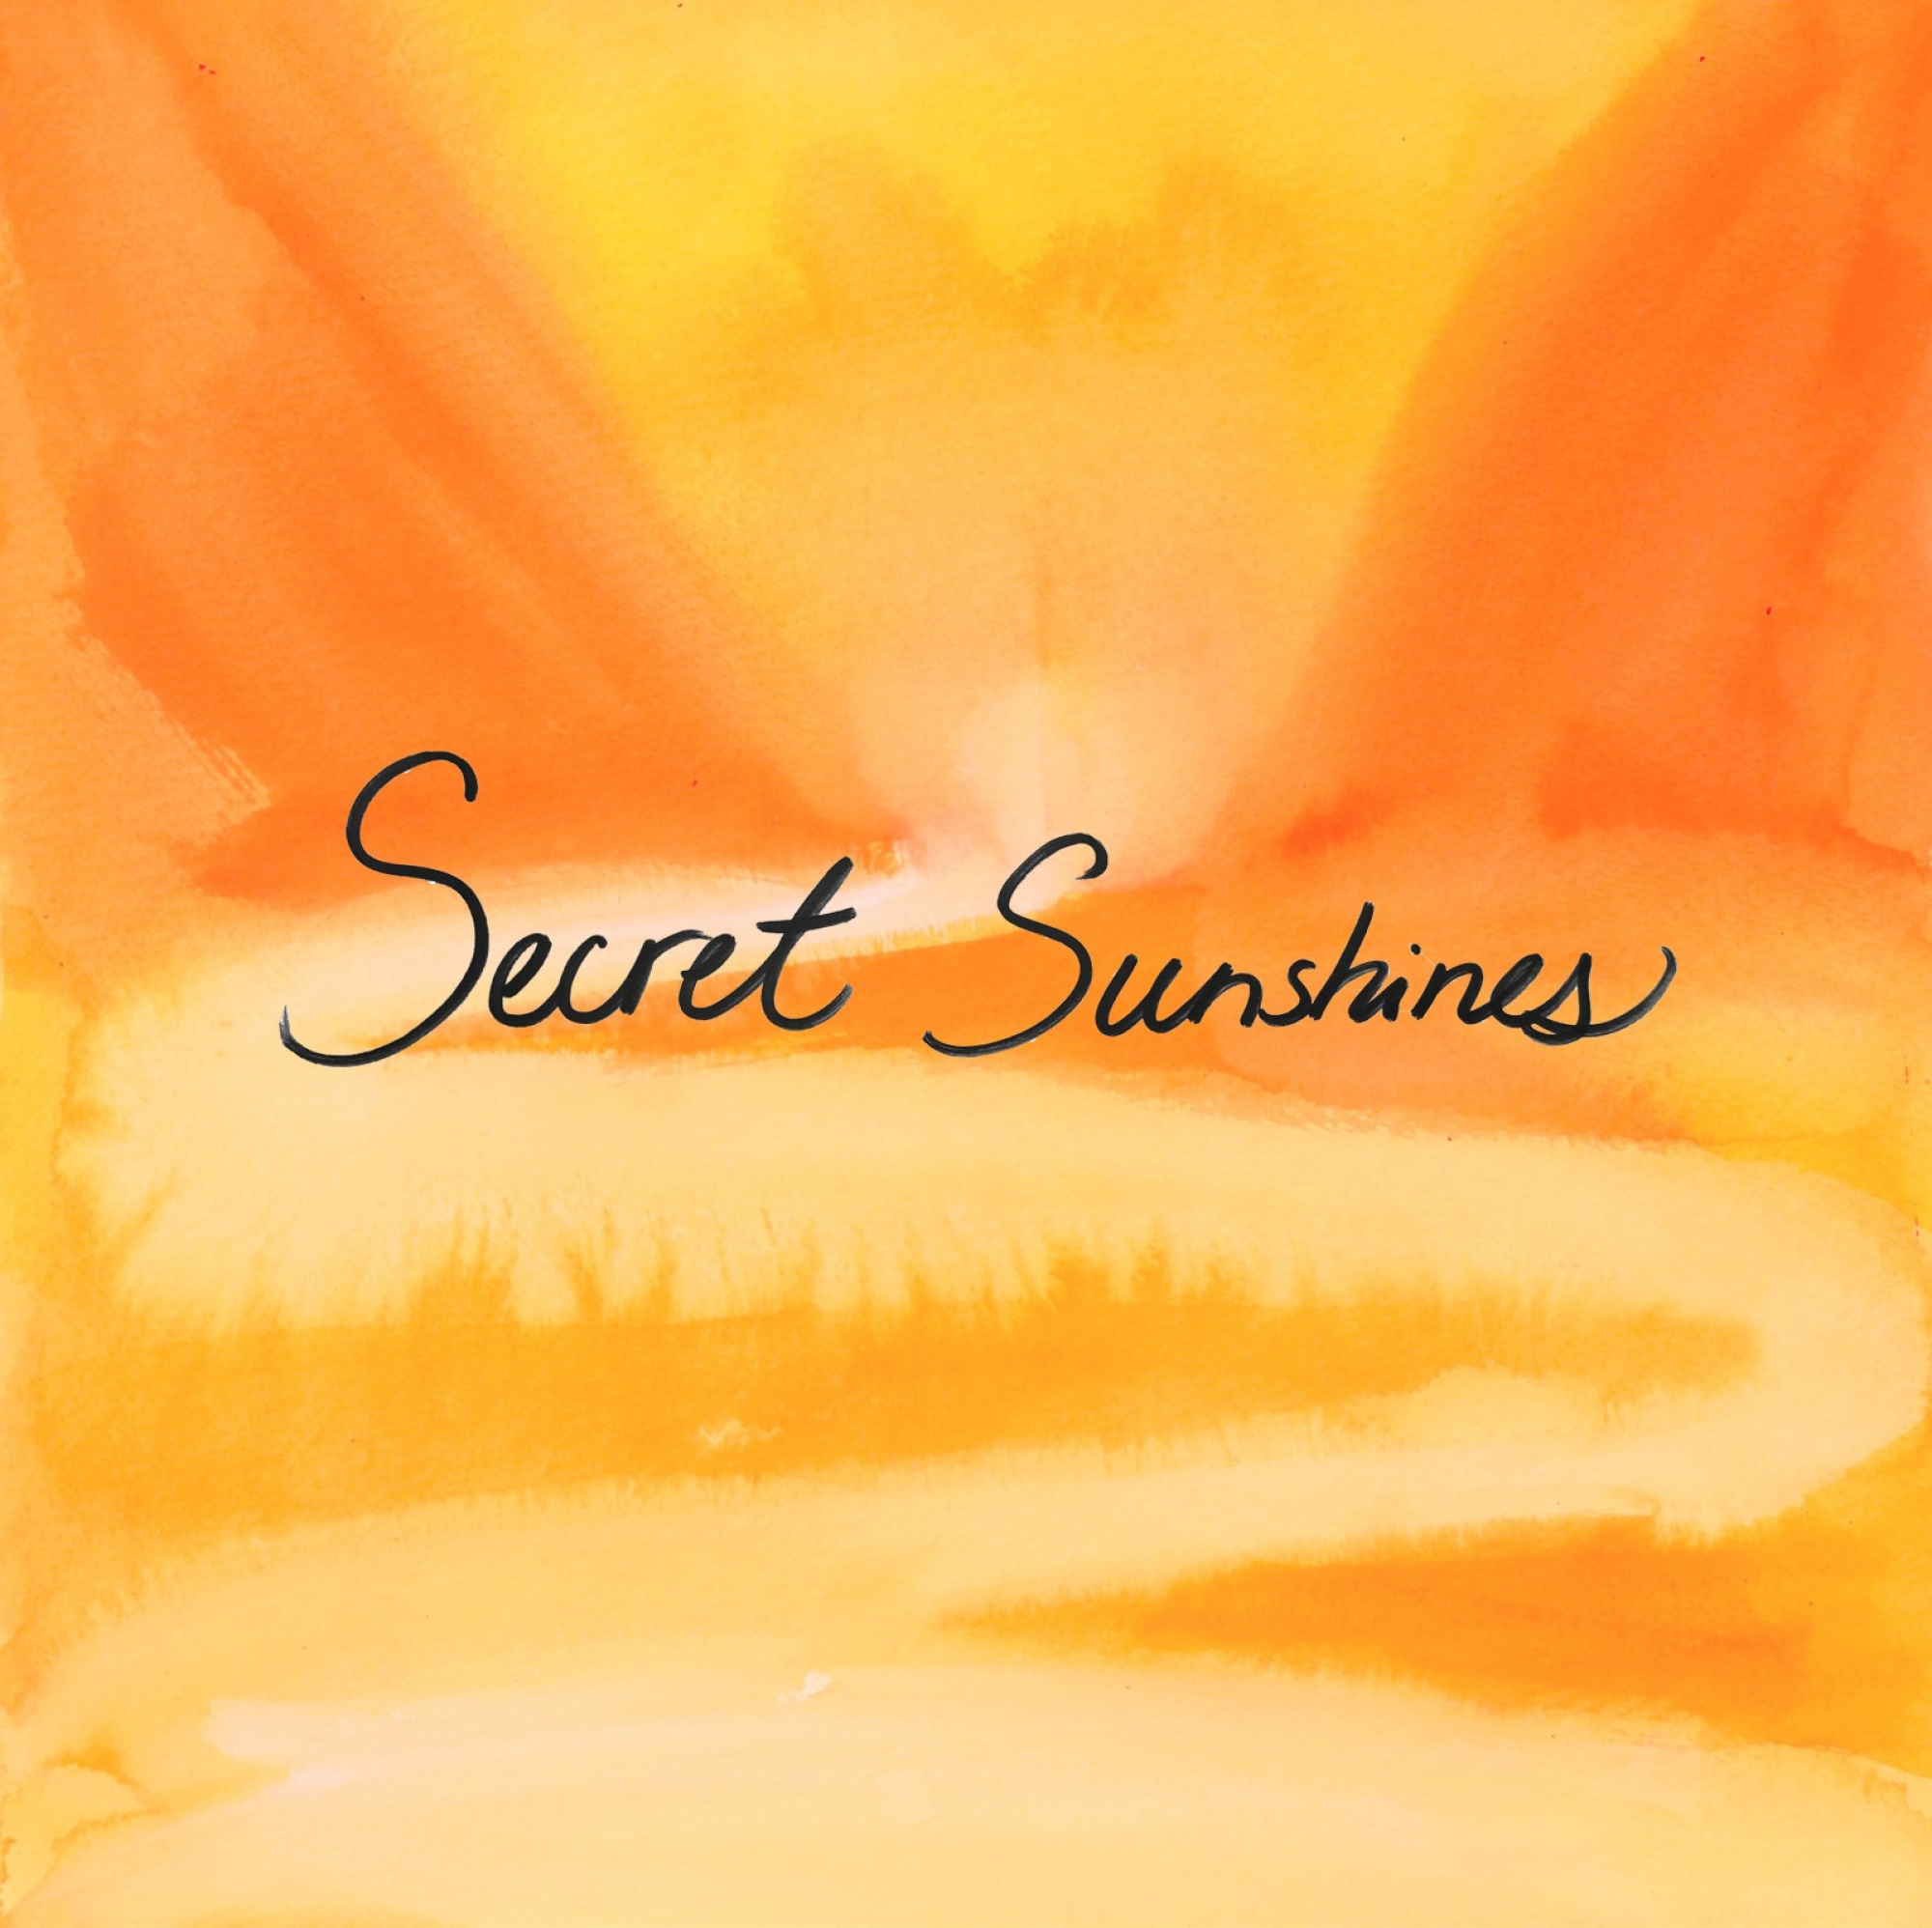 Secret Sunshines - Arusha Gallery